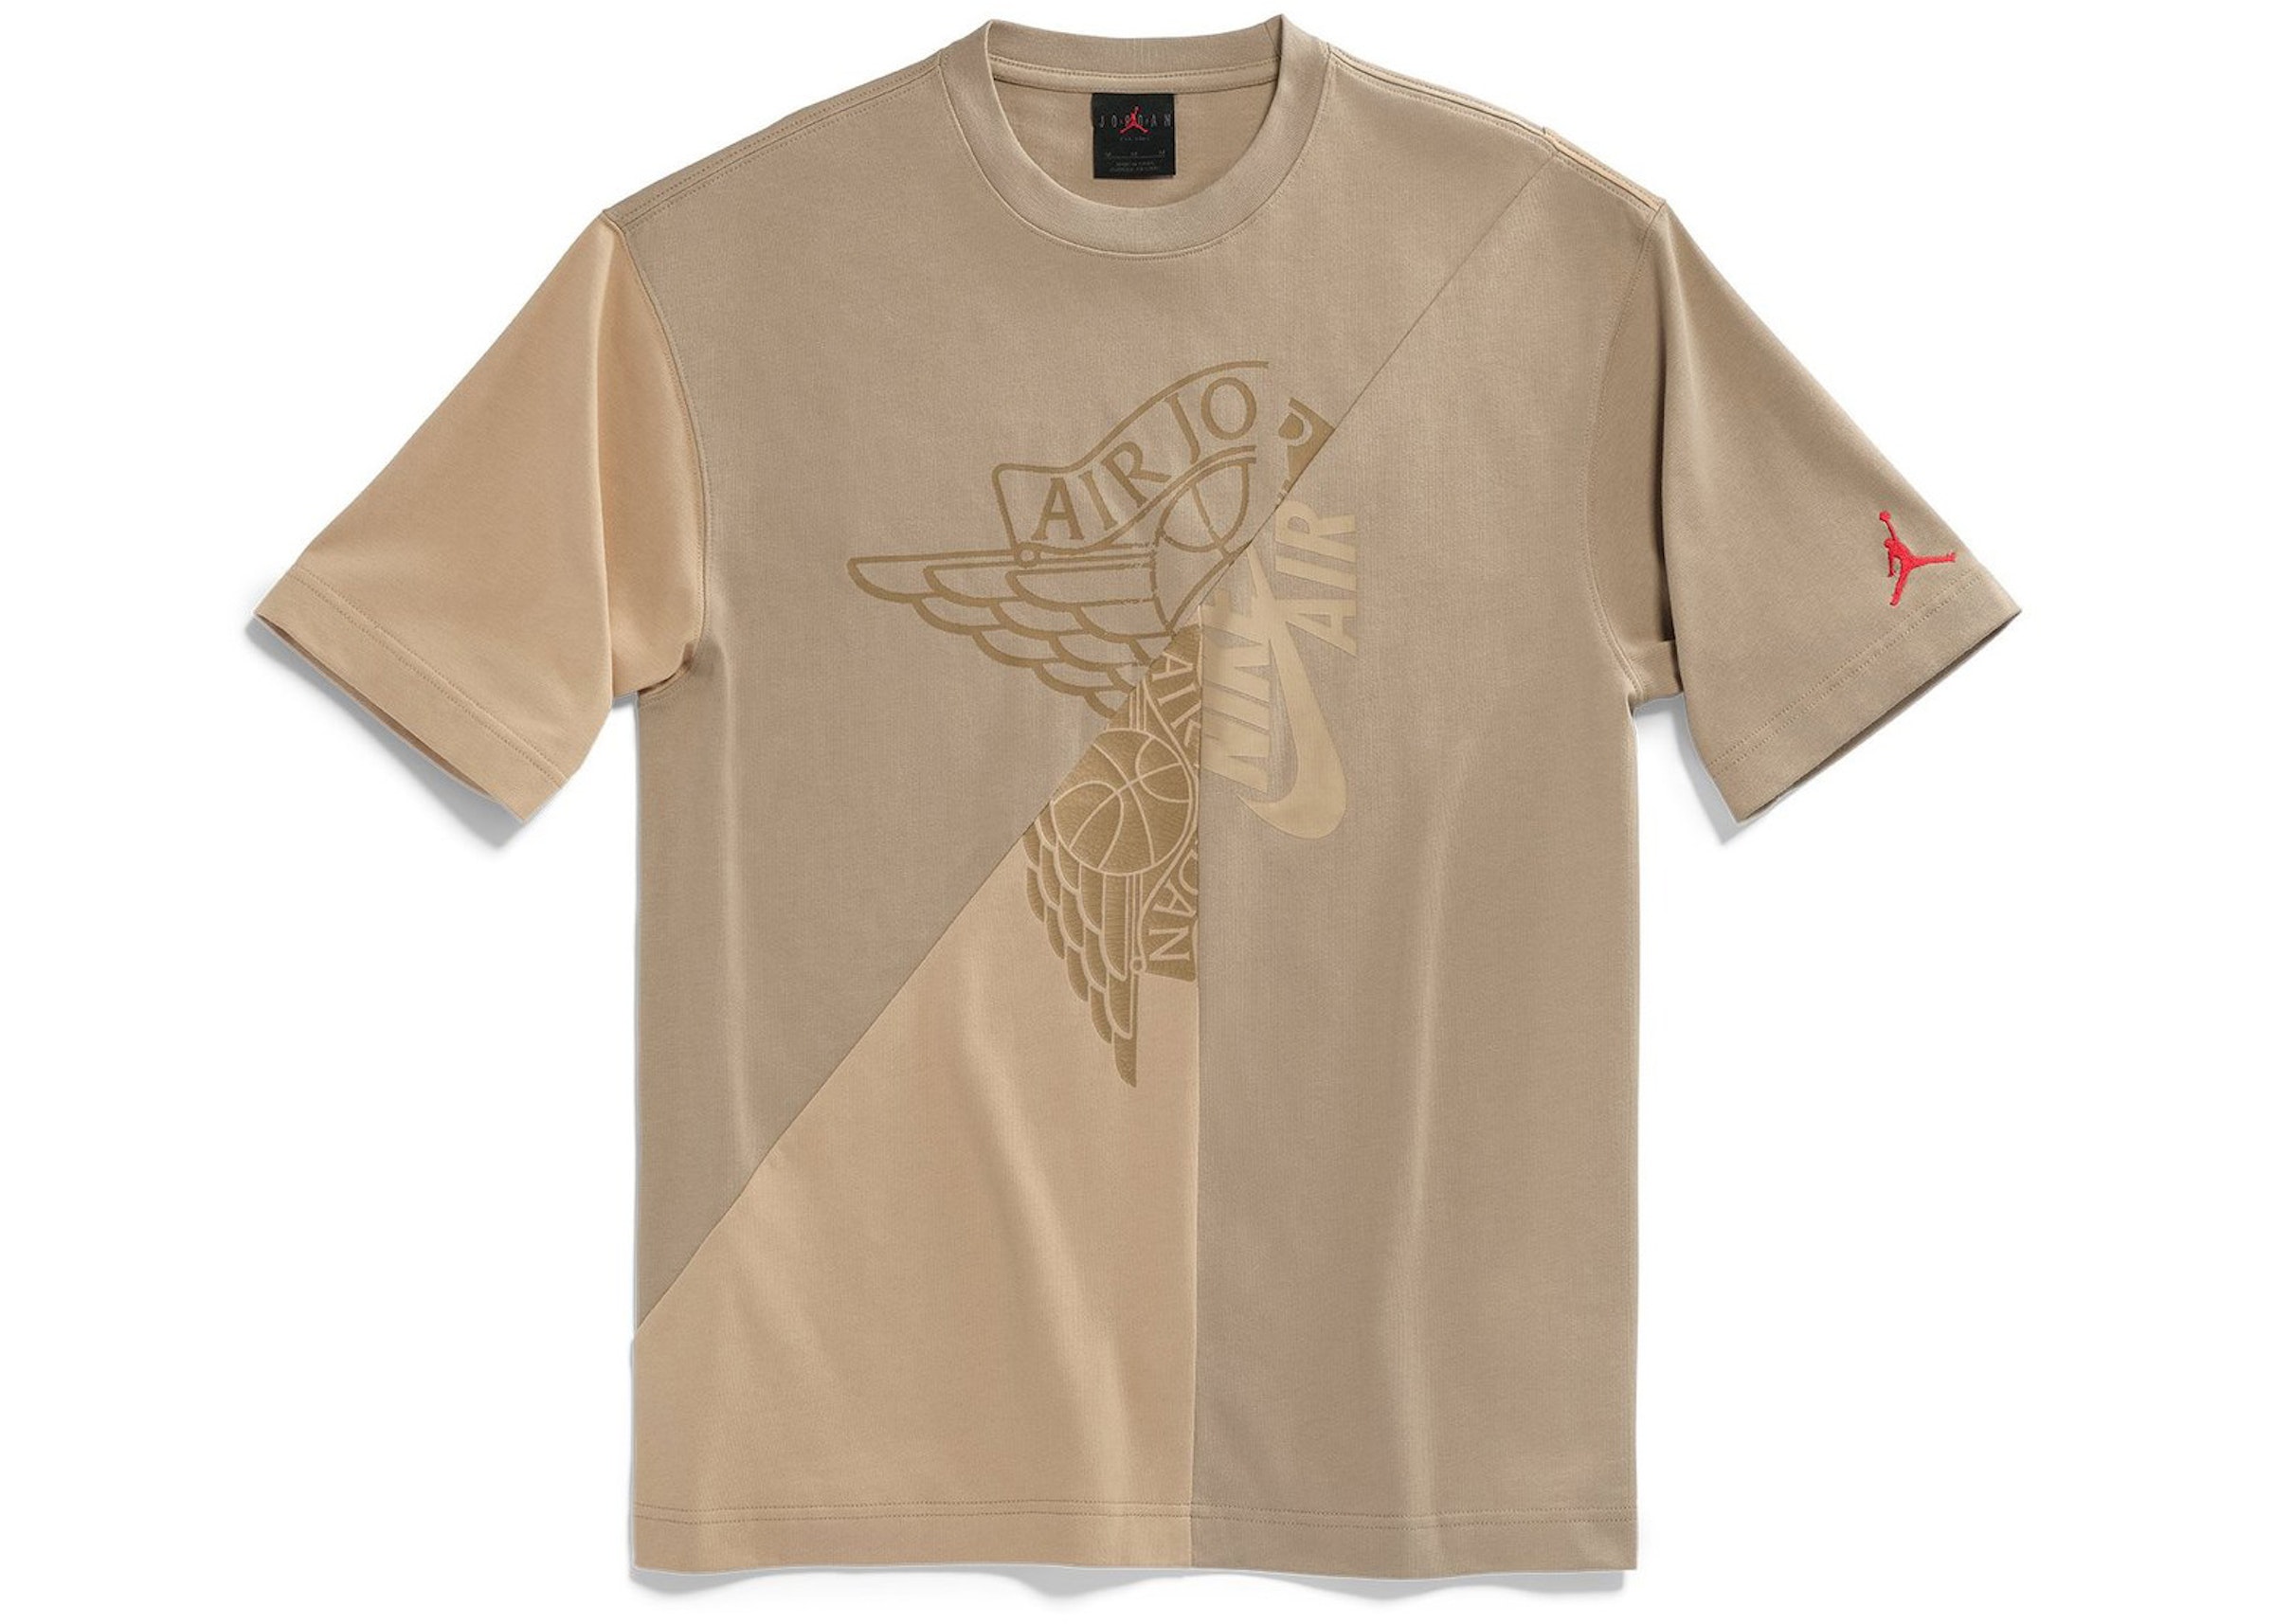 Travis Scott Cactus Jack x Jordan T-shirt Khaki/Desert - Men's - US